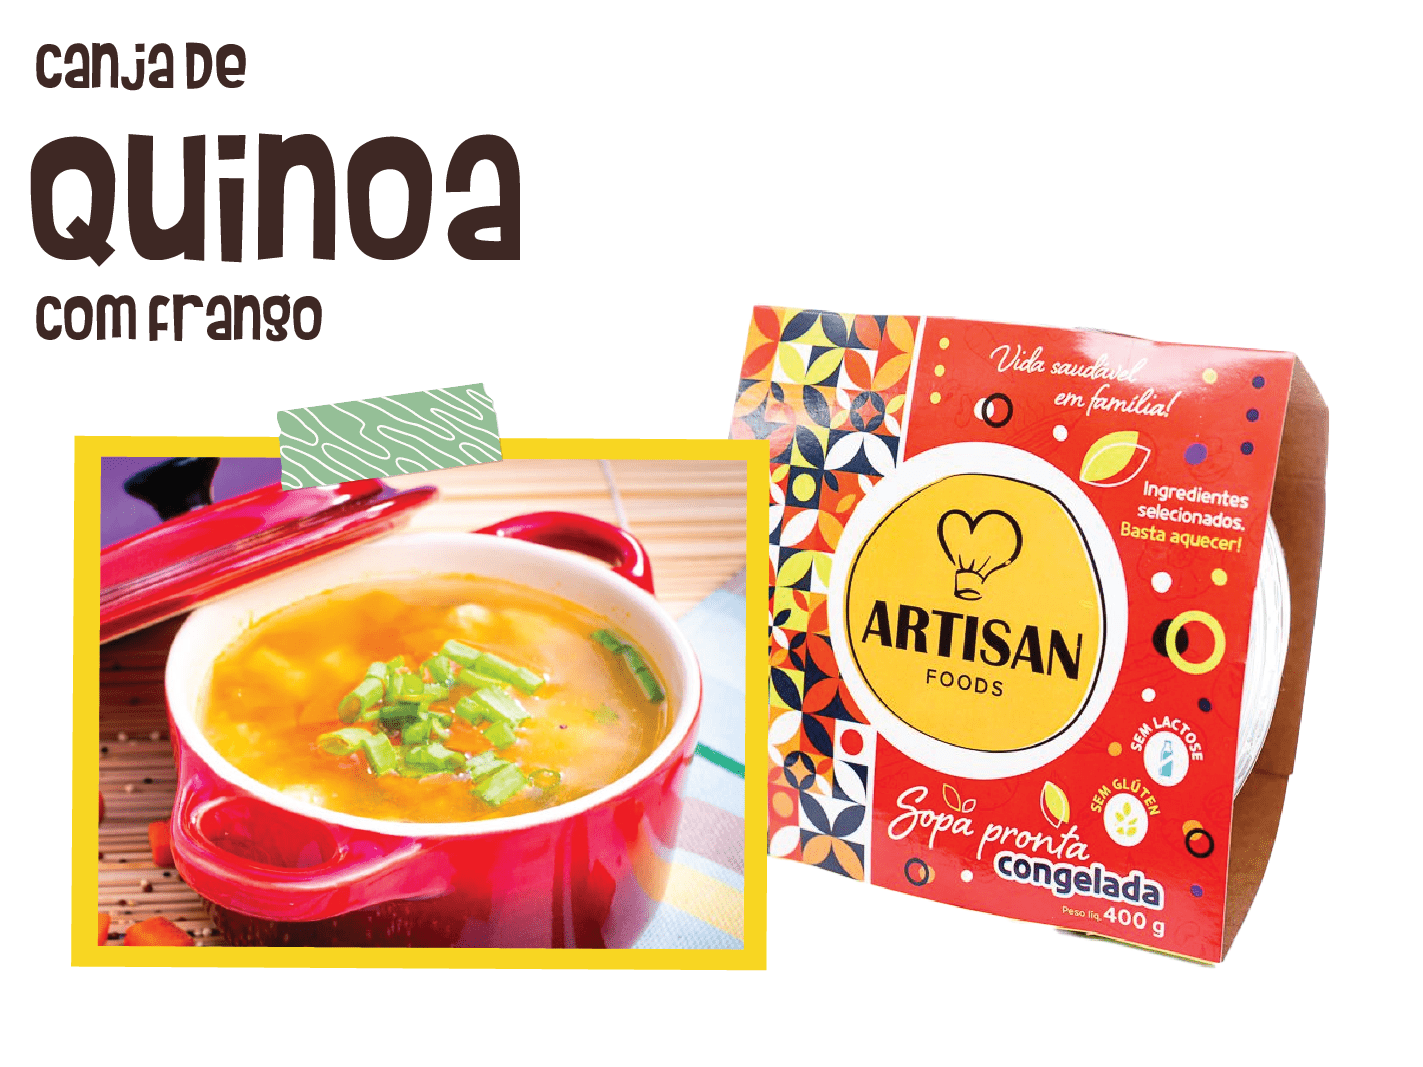 Canja de quinoa c/ frango - 400g - Artisan Foods